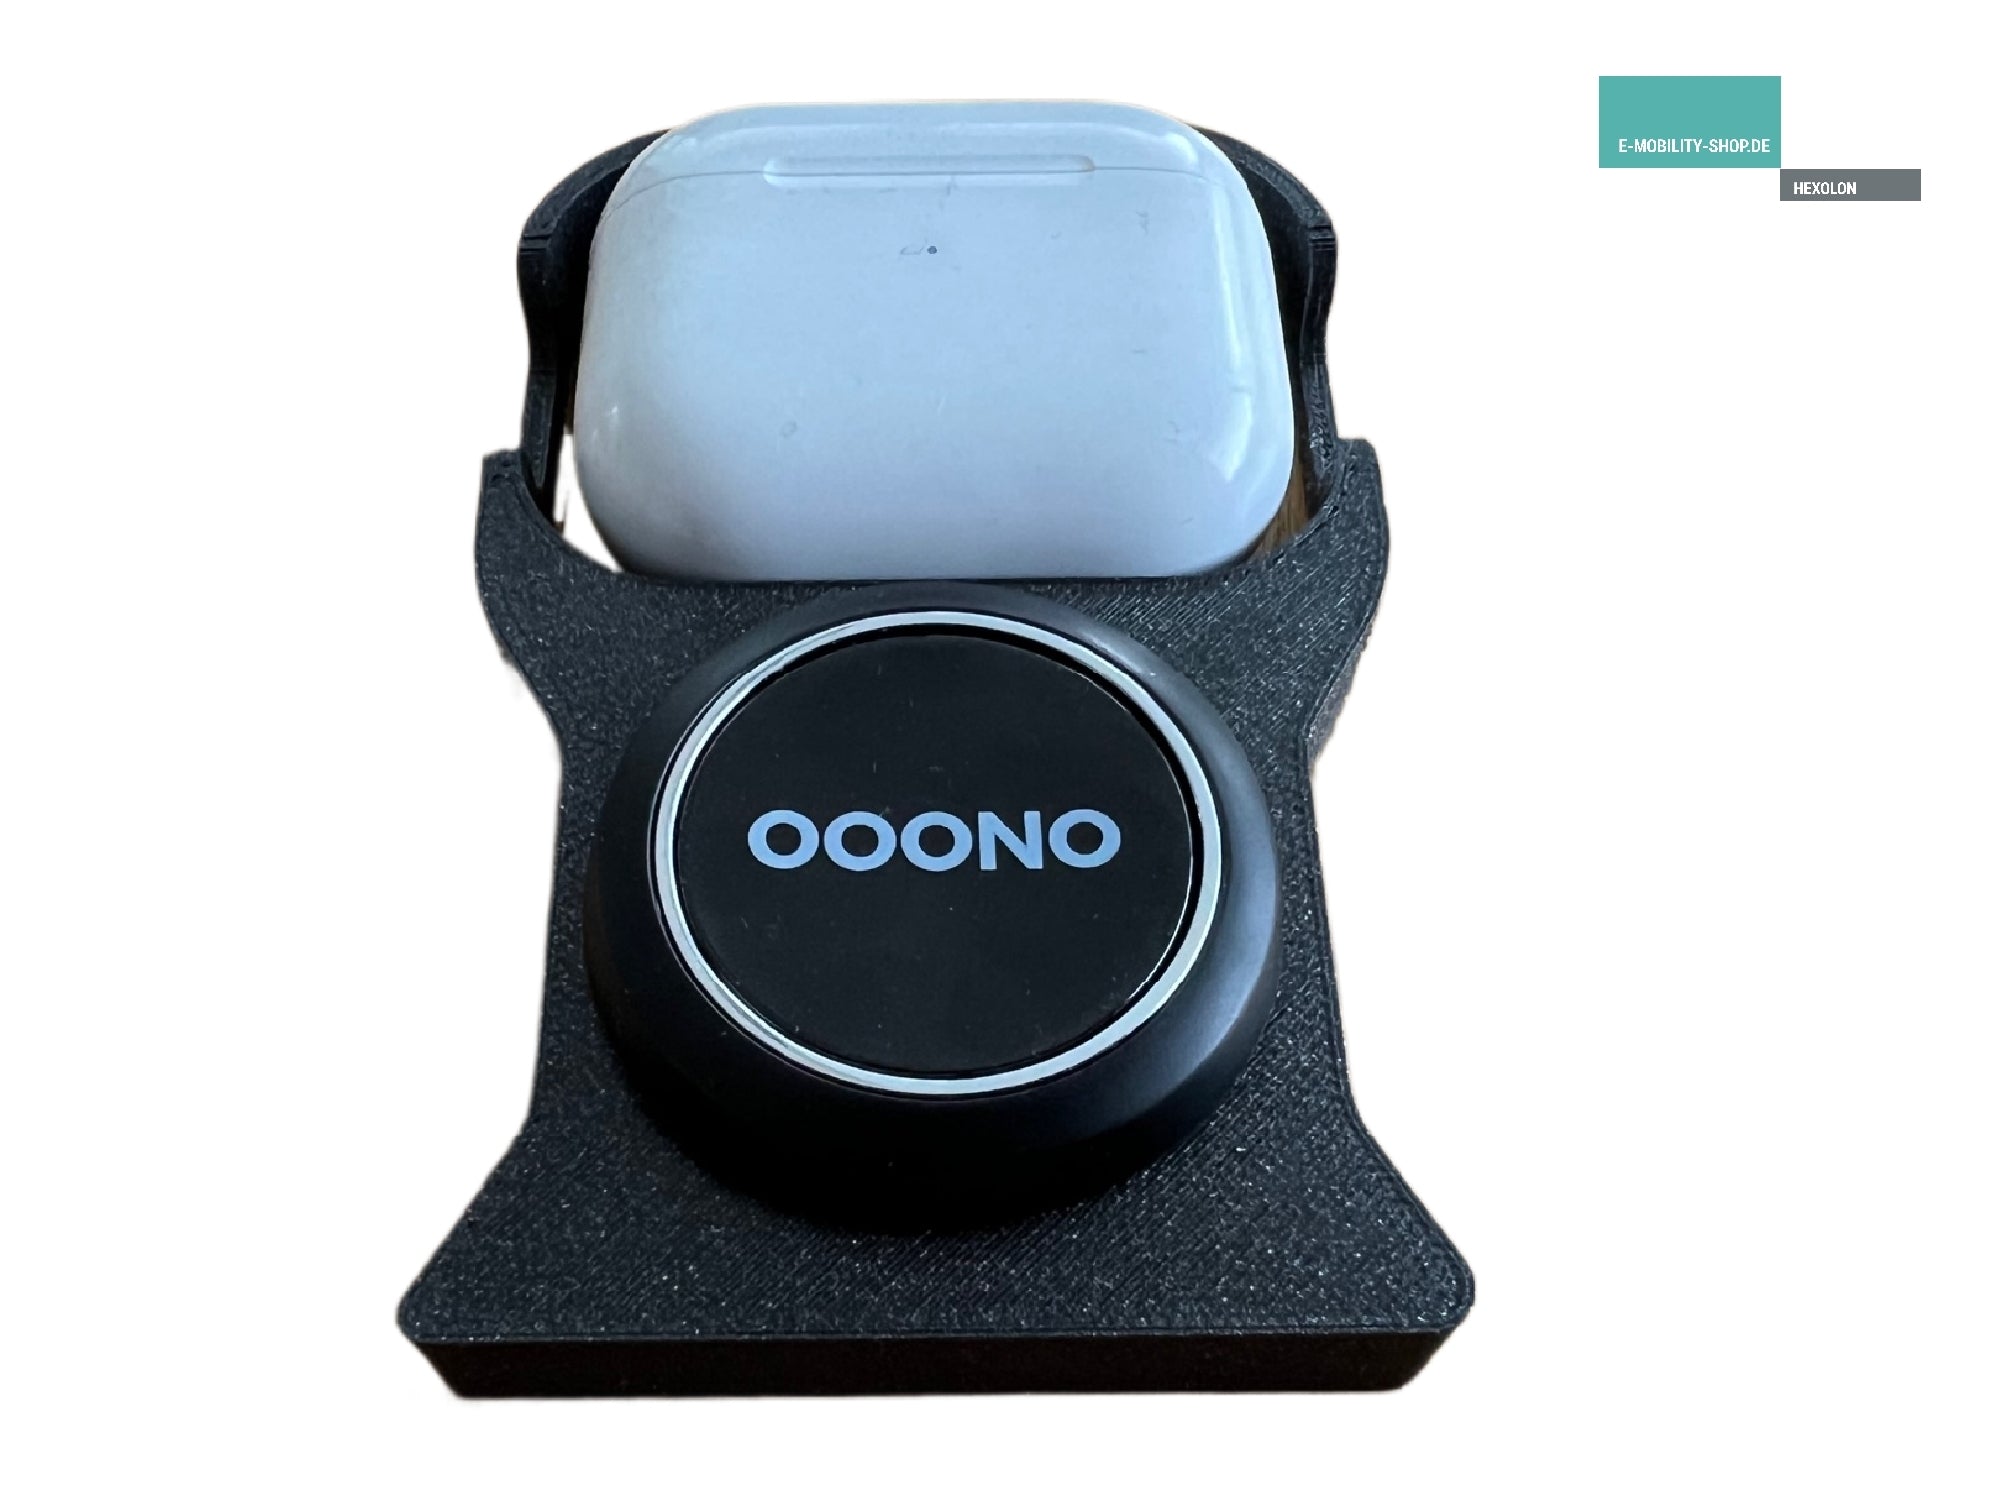 ooono Mount Phone Holder : : High-Tech